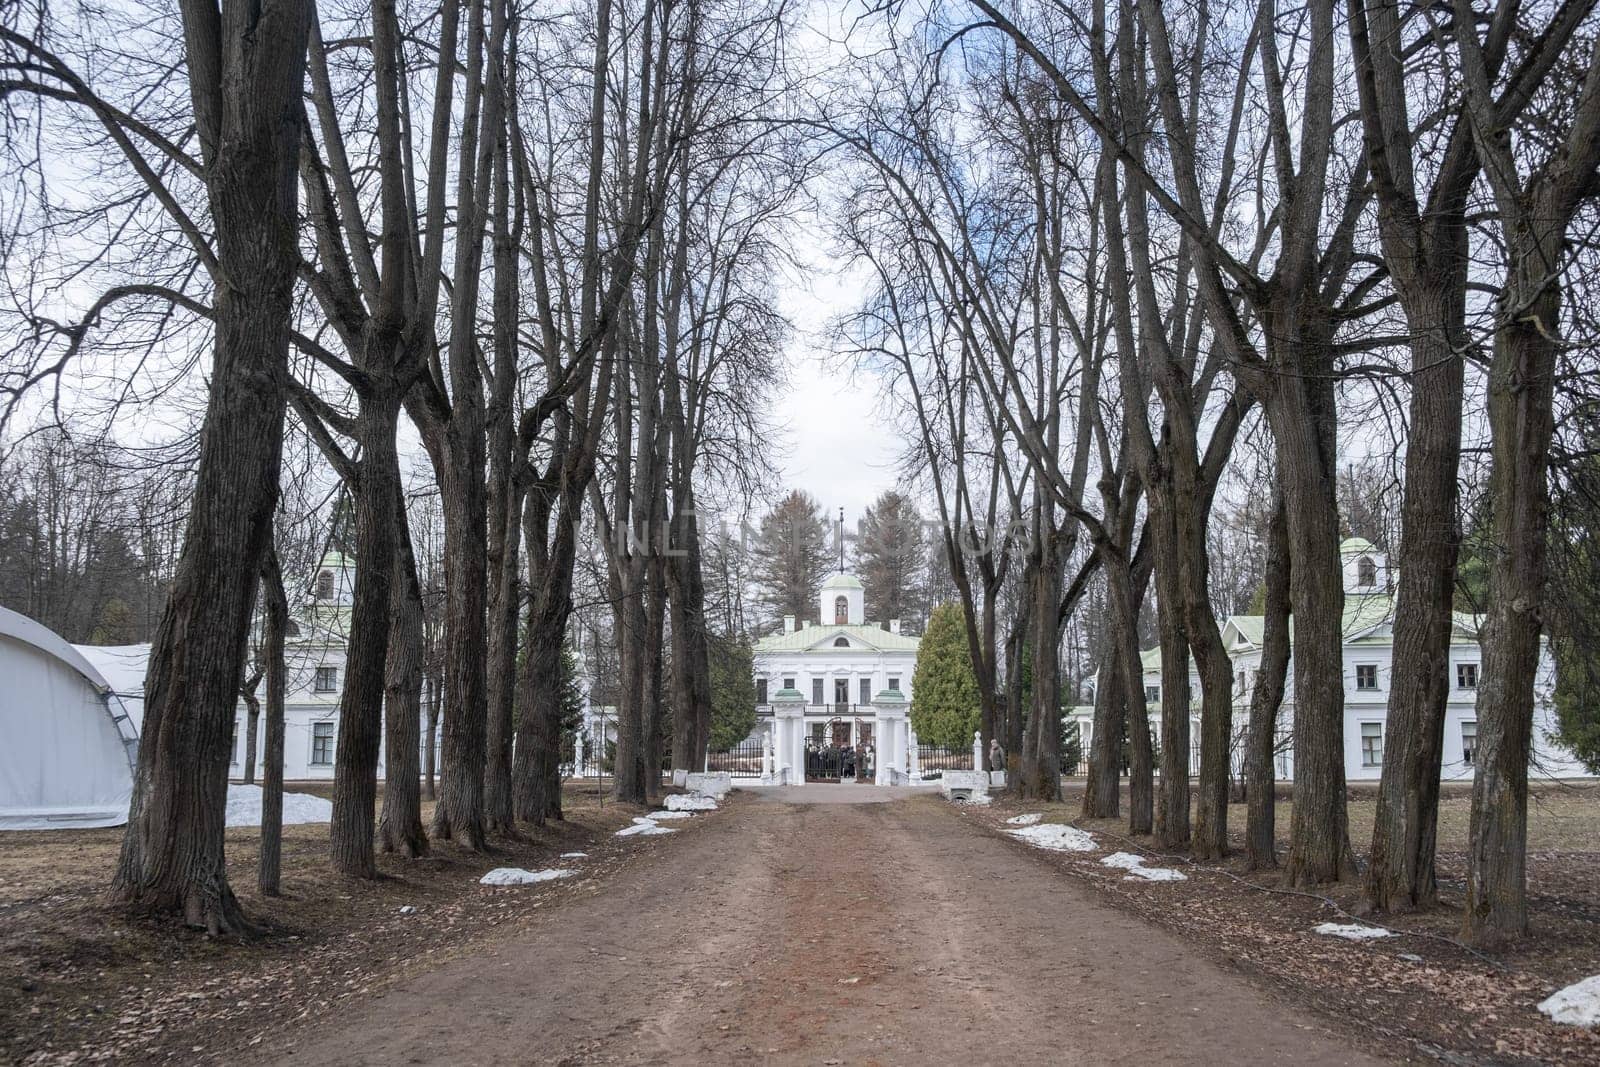 Serednikovo manor, mansion, palace, white building. Equestrian building, by AnatoliiFoto